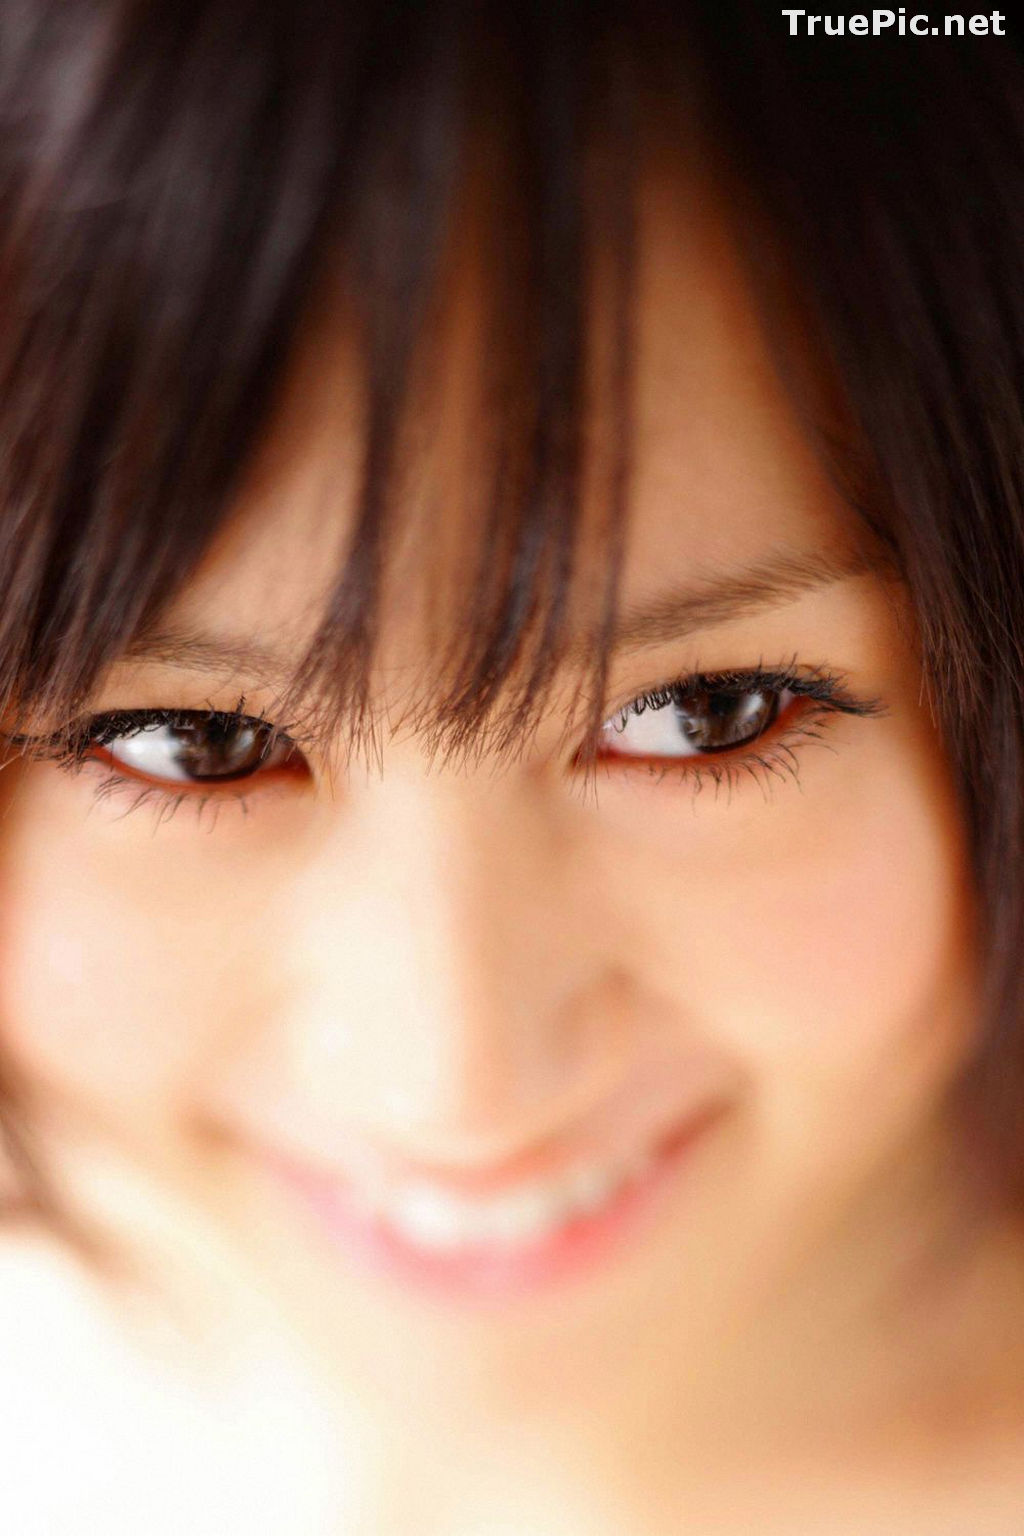 Image [YS Web] Vol.330 - Japanese Actress and Singer - Maeda Atsuko - TruePic.net - Picture-37